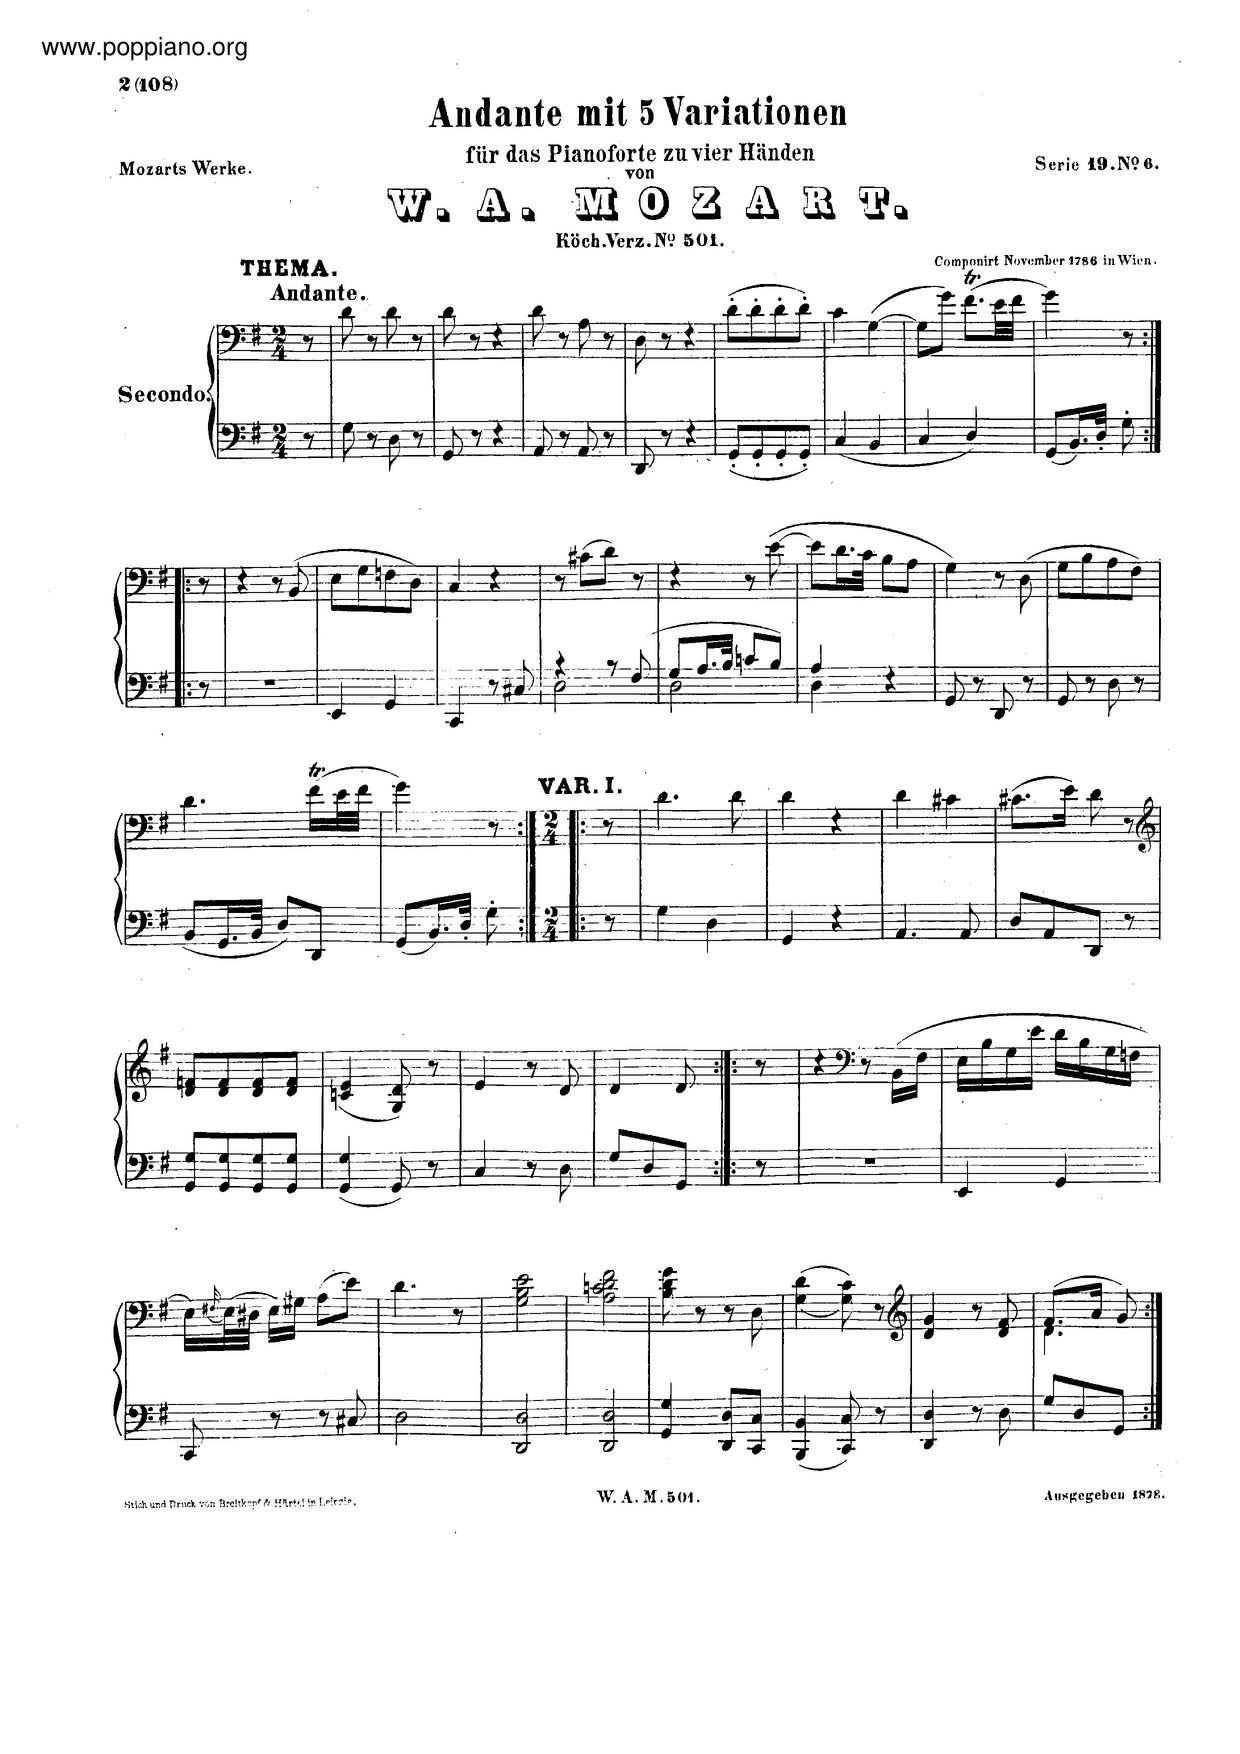 5 Variations In G Major, K. 501 Score